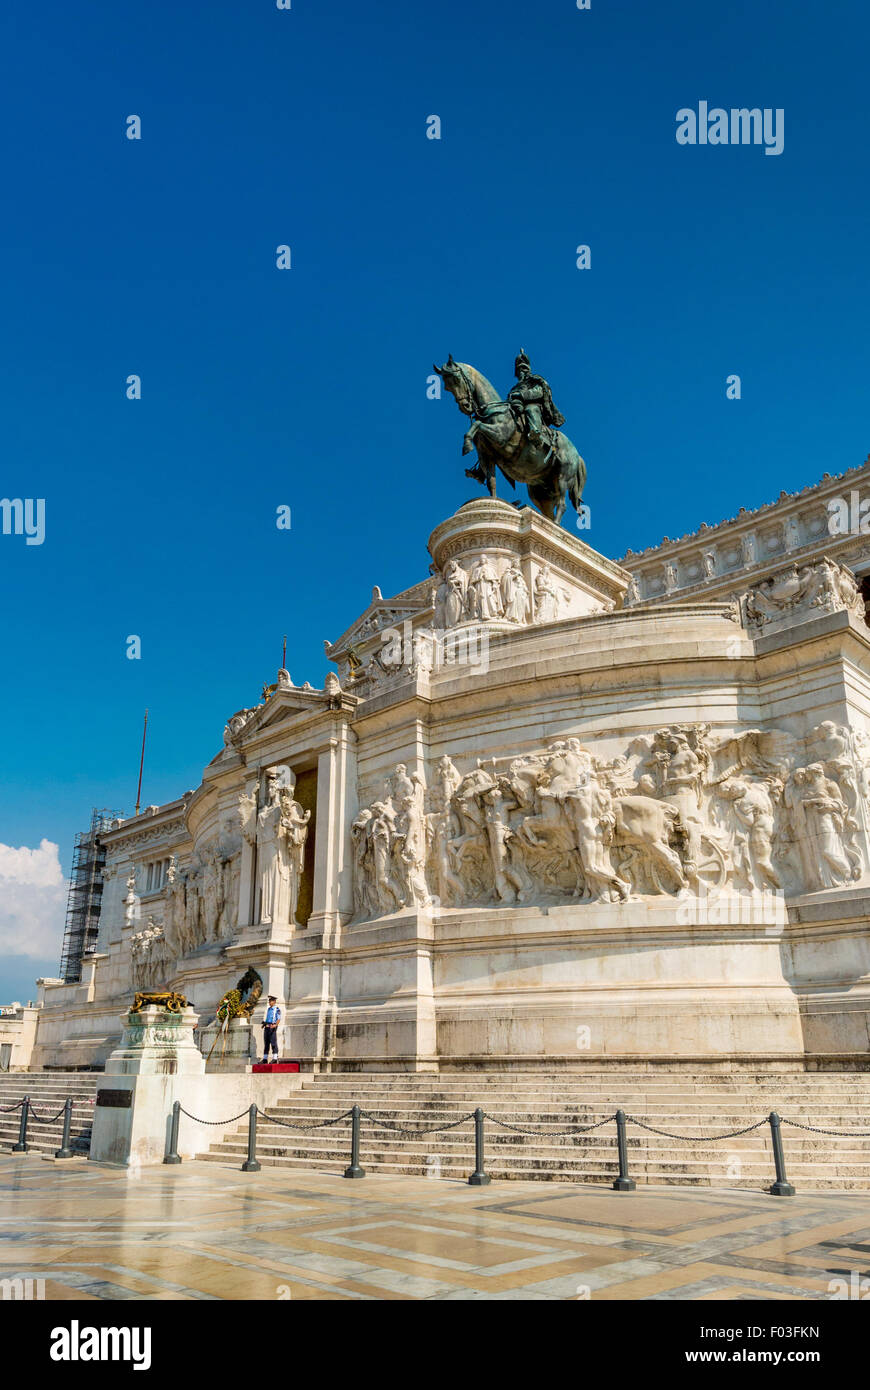 Altare della Patria or National Monument to Victor Emmanuel II. Rome, Italy. Stock Photo